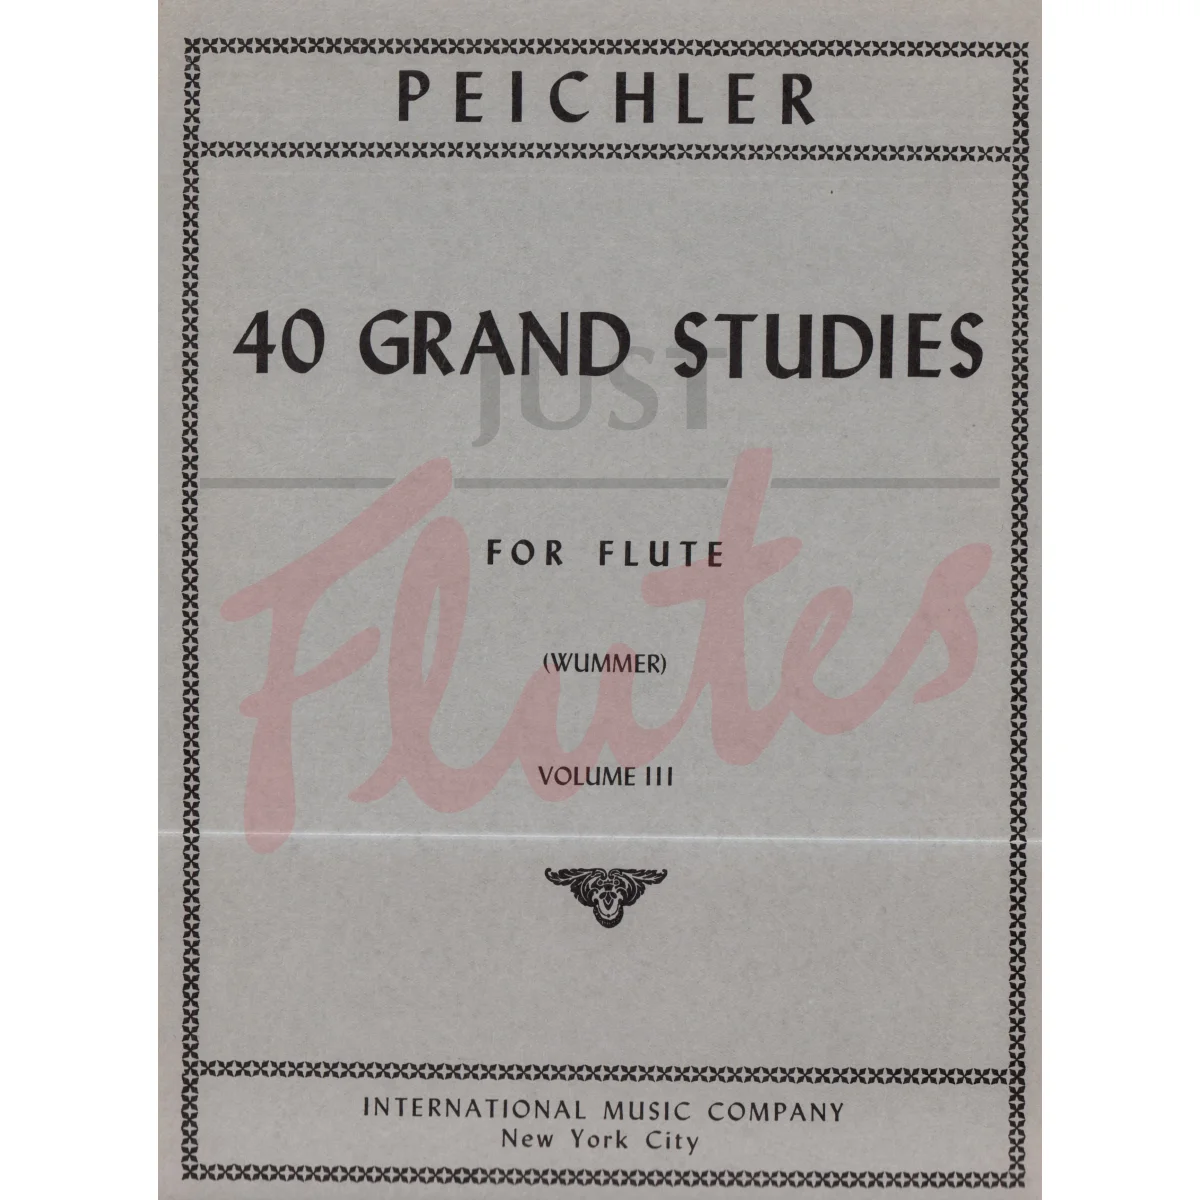 40 Grand Studies for Flute, Vol. 3